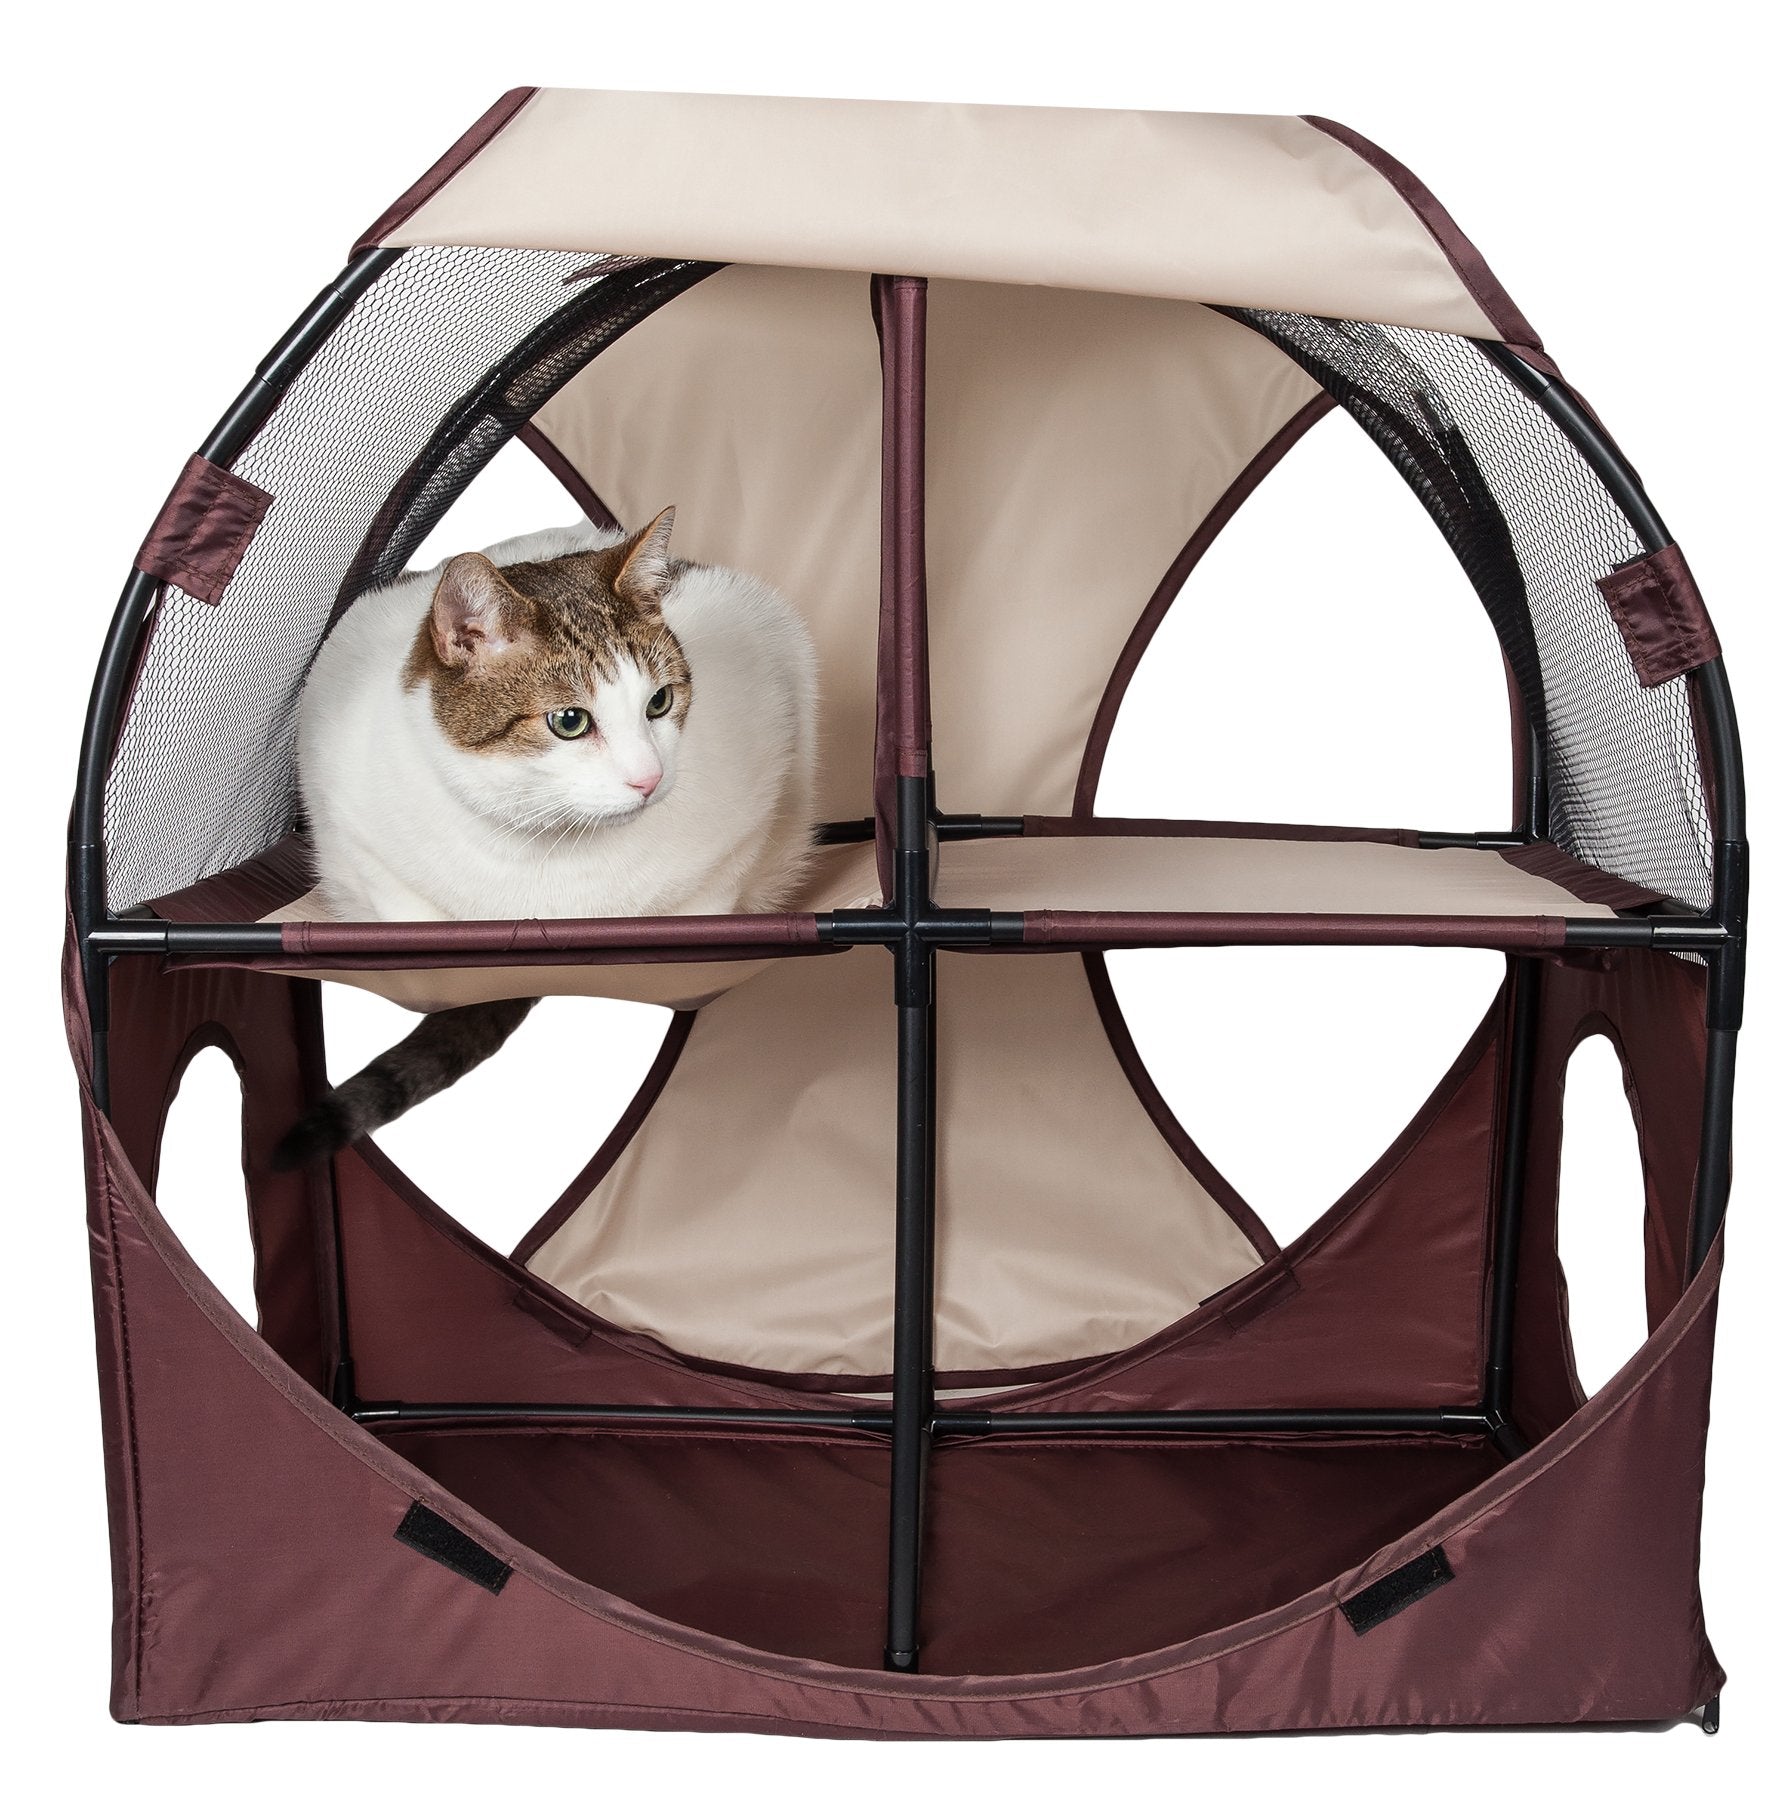 Pet Life Kitty-Play Travel Cat House - Khaki/Brown